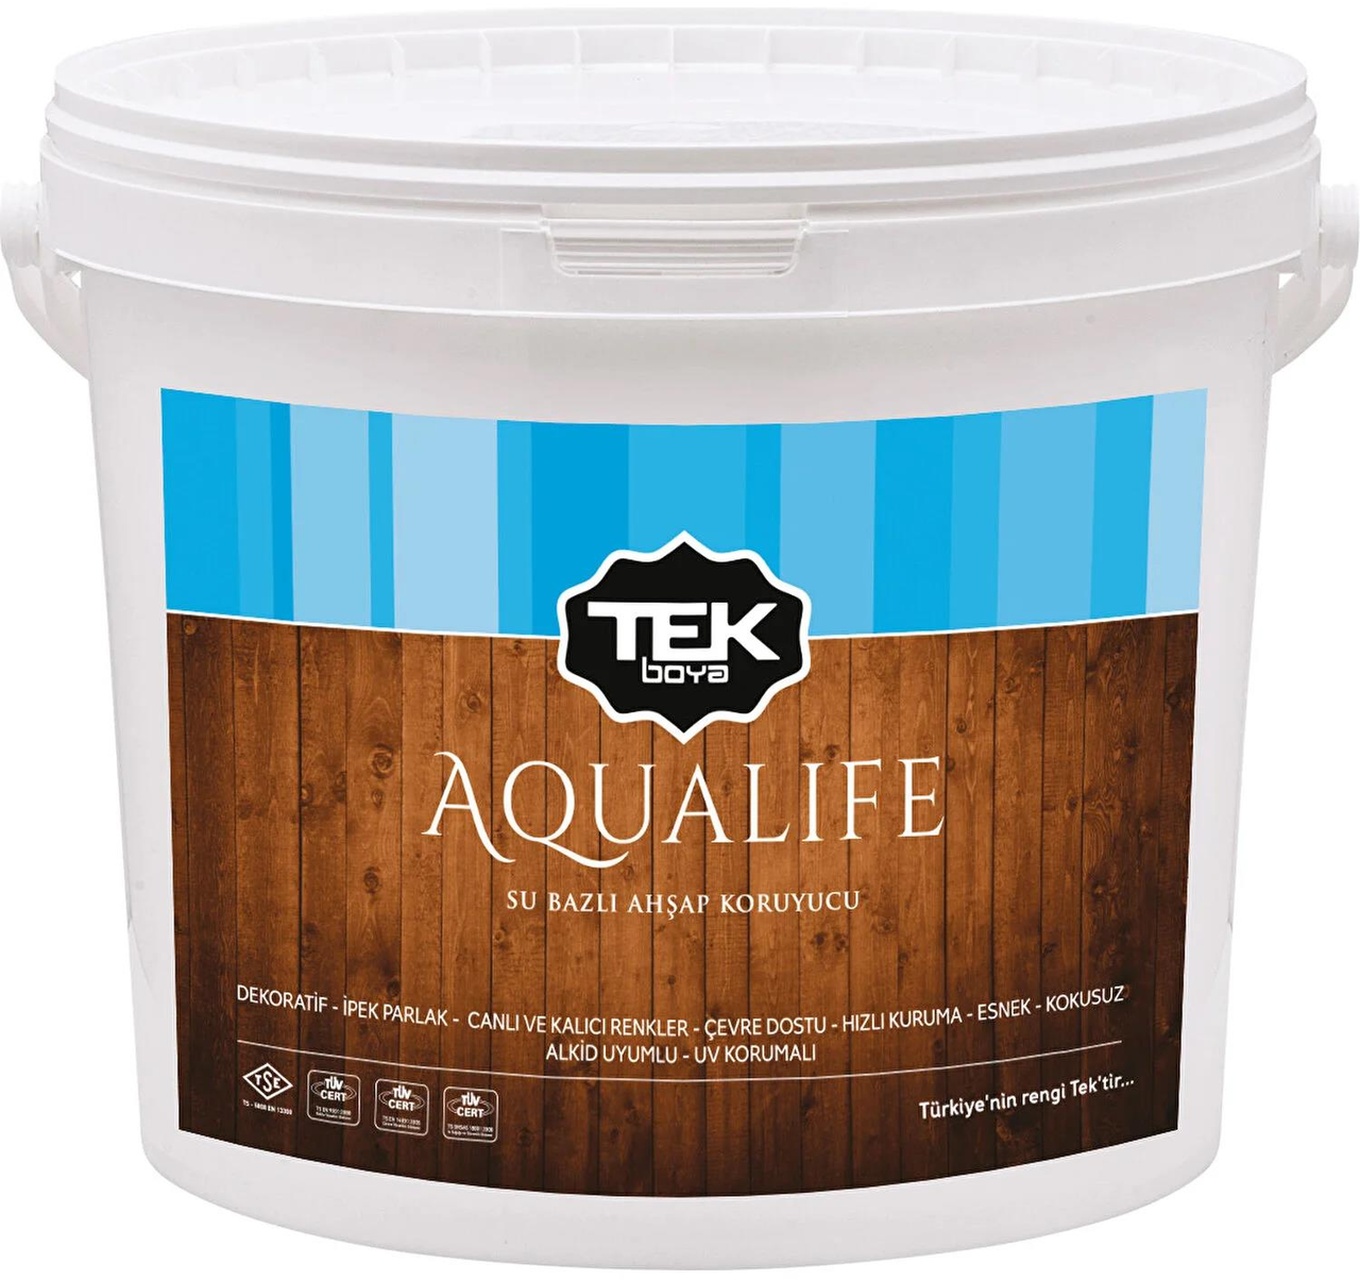 Tek Boya Aqualine Aqualife Su Bazlı Ahşap Koruyucu Kokusuz 2,5 Litre